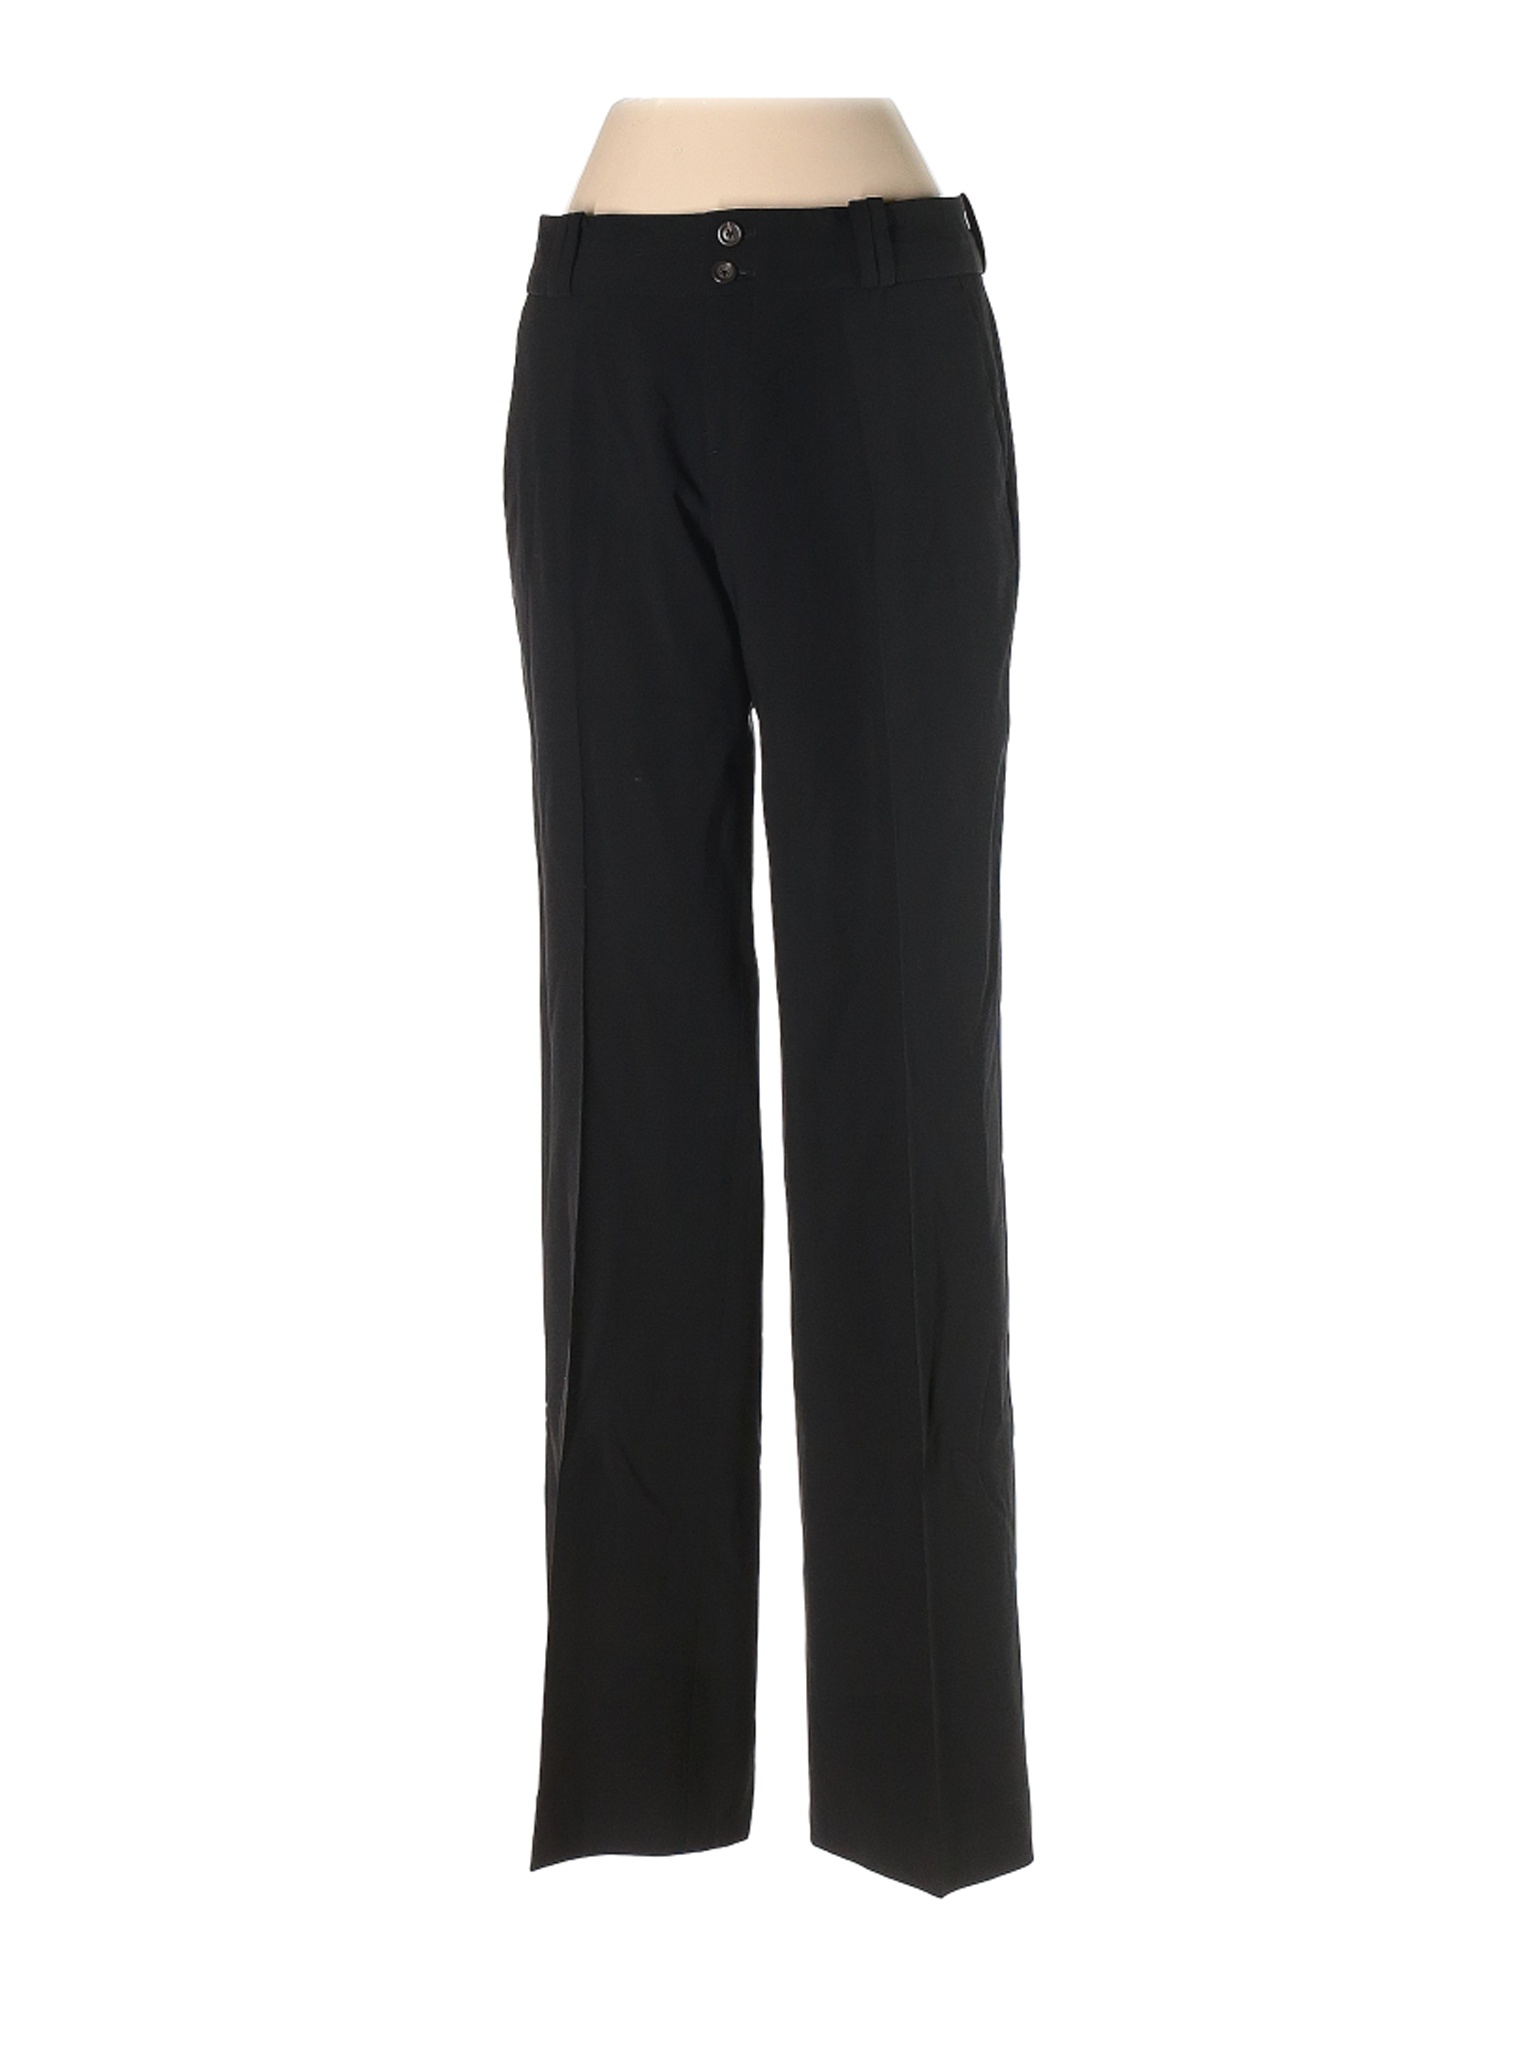 Banana Republic Women Black Dress Pants 0 | eBay